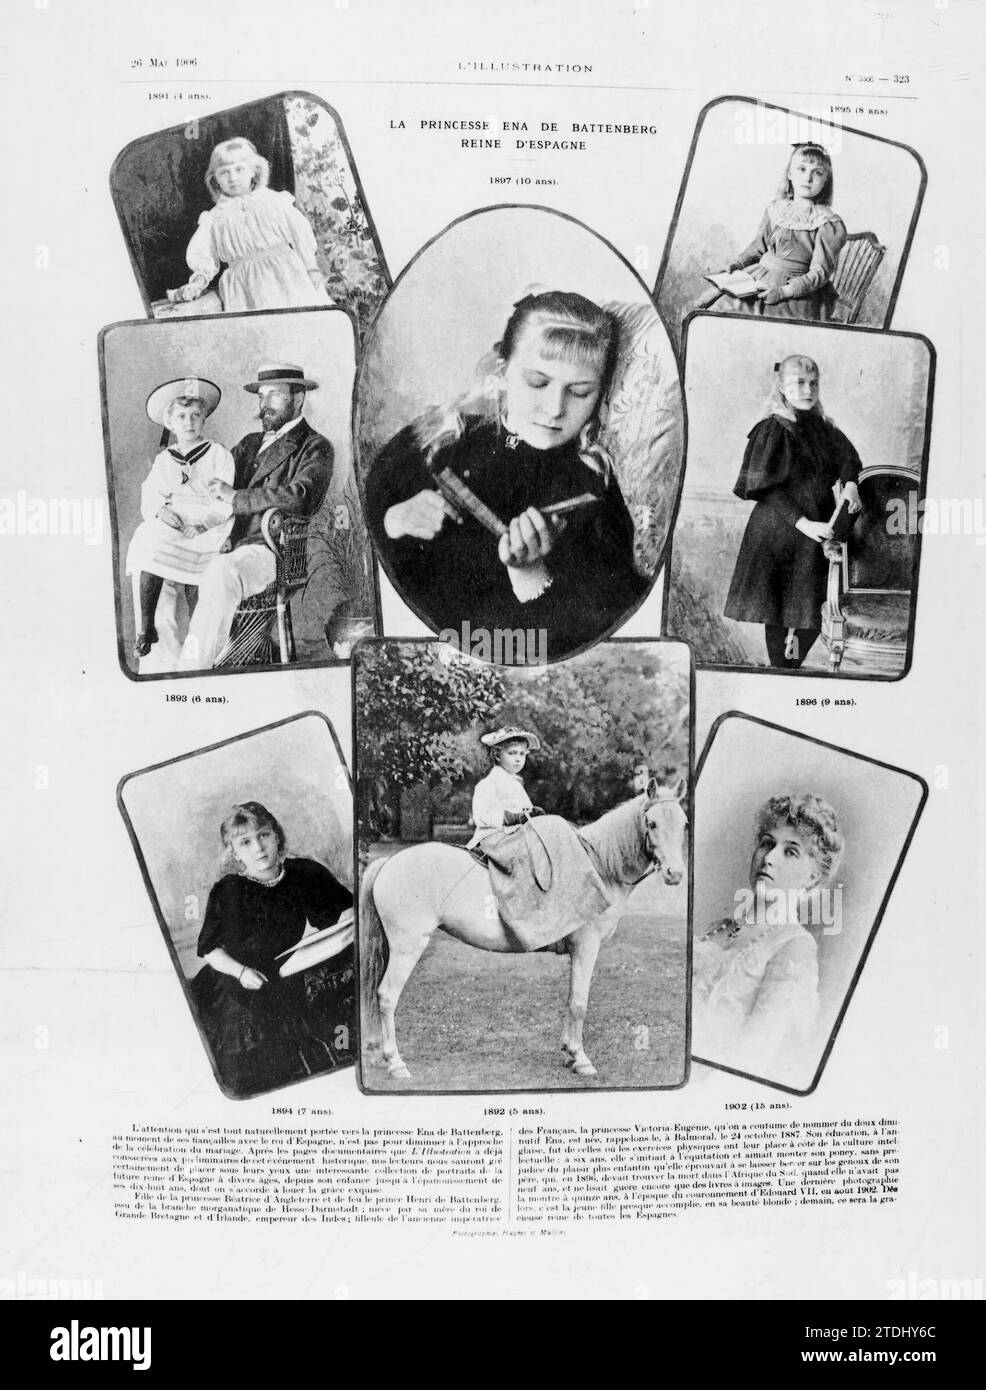 12/31/1905. Princess Victoria Eugenie of Battenberg. Credit: Album / Archivo ABC Stock Photo